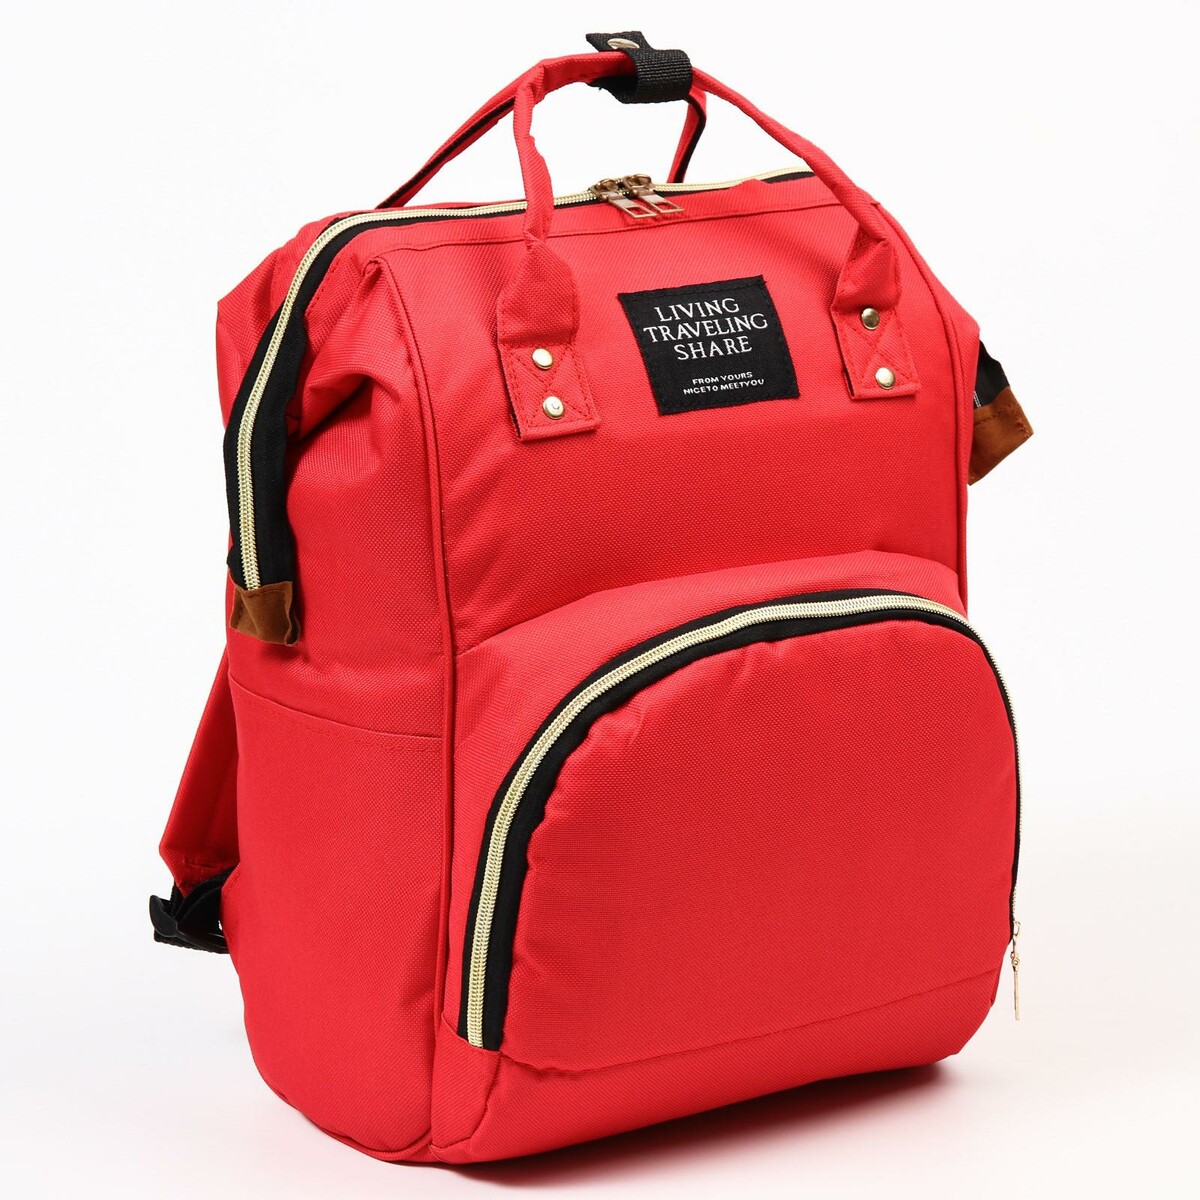 Рюкзак женский с термокарманом, термосумка - портфель, цвет красный рюкзак женский с термокарманом термосумка портфель серый зеленый